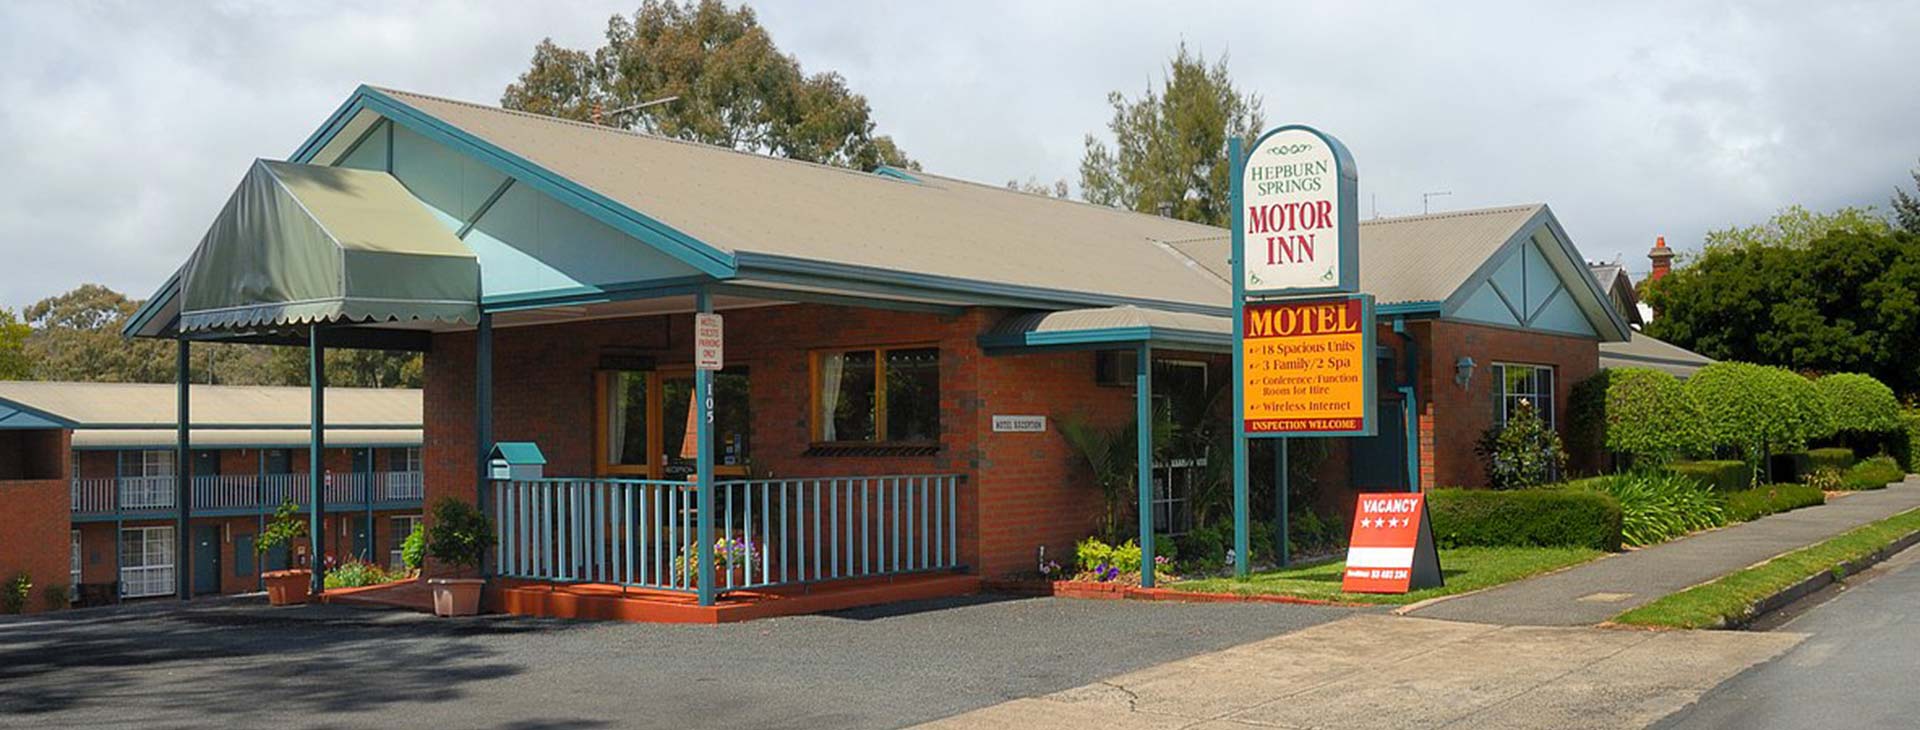 Hepburn Springs Motor Inn